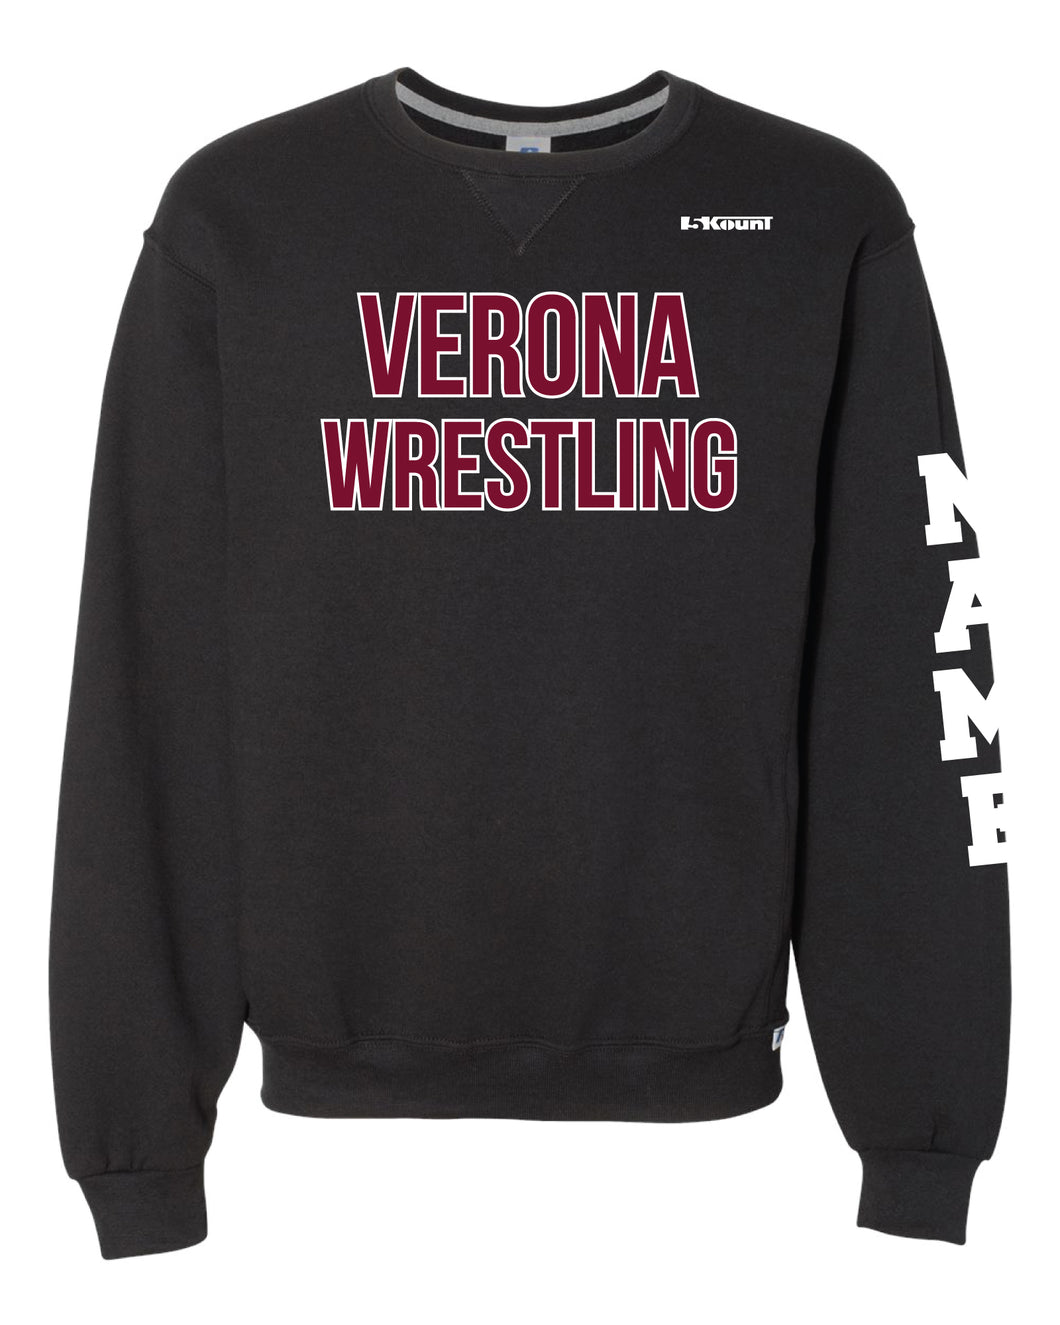 Verona Wrestling Russell Athletic Cotton Crewneck Sweatshirt - Black - 5KounT2018